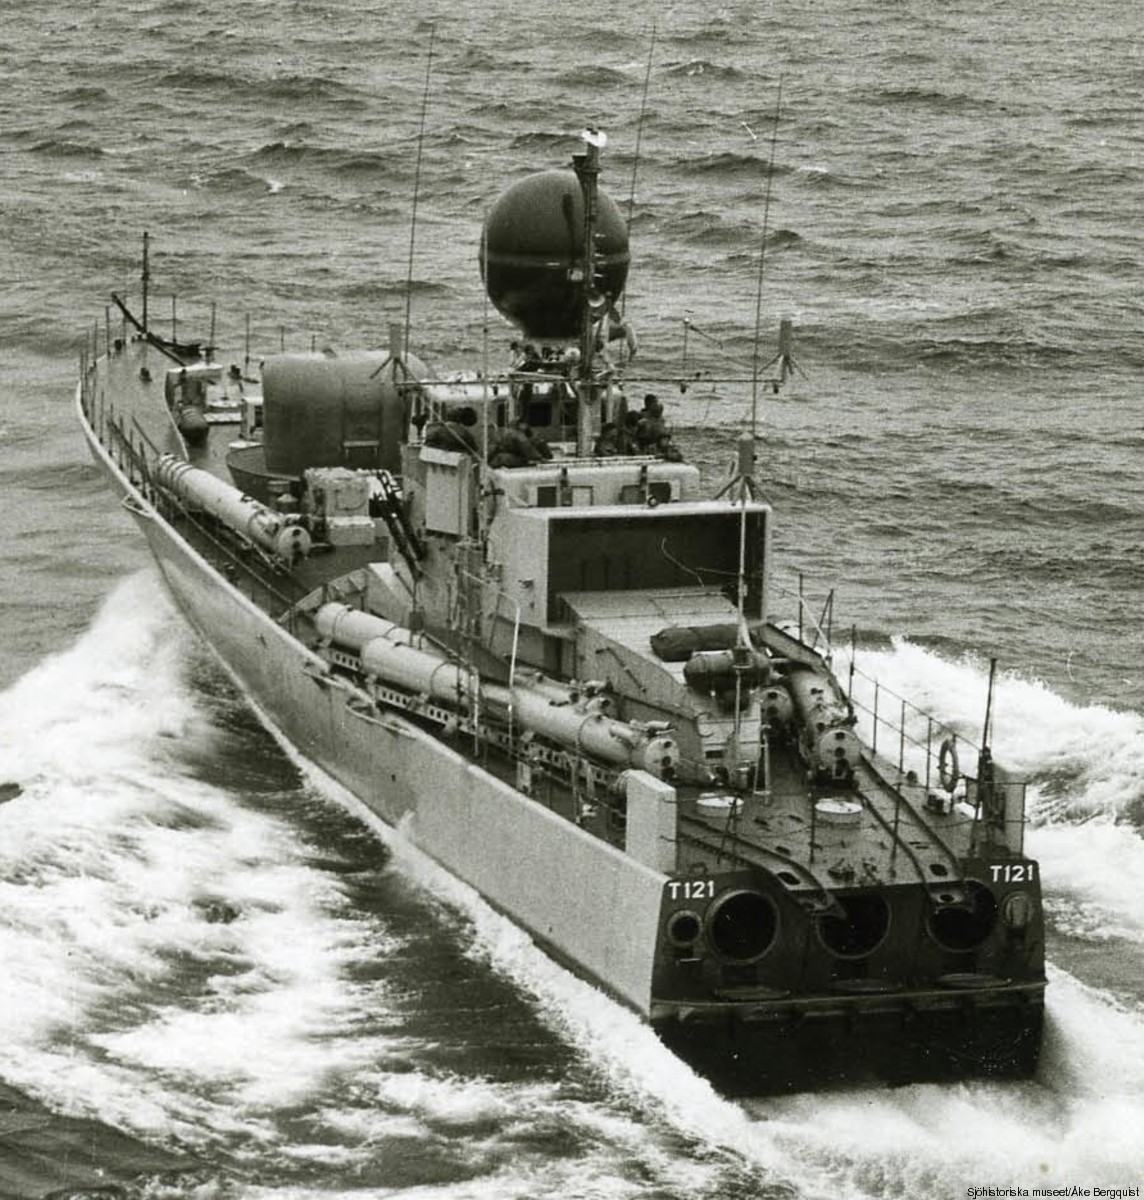 t121 spica hswms hms class fast attack craft torpedo boat vessel swedish navy svenska marinen 10